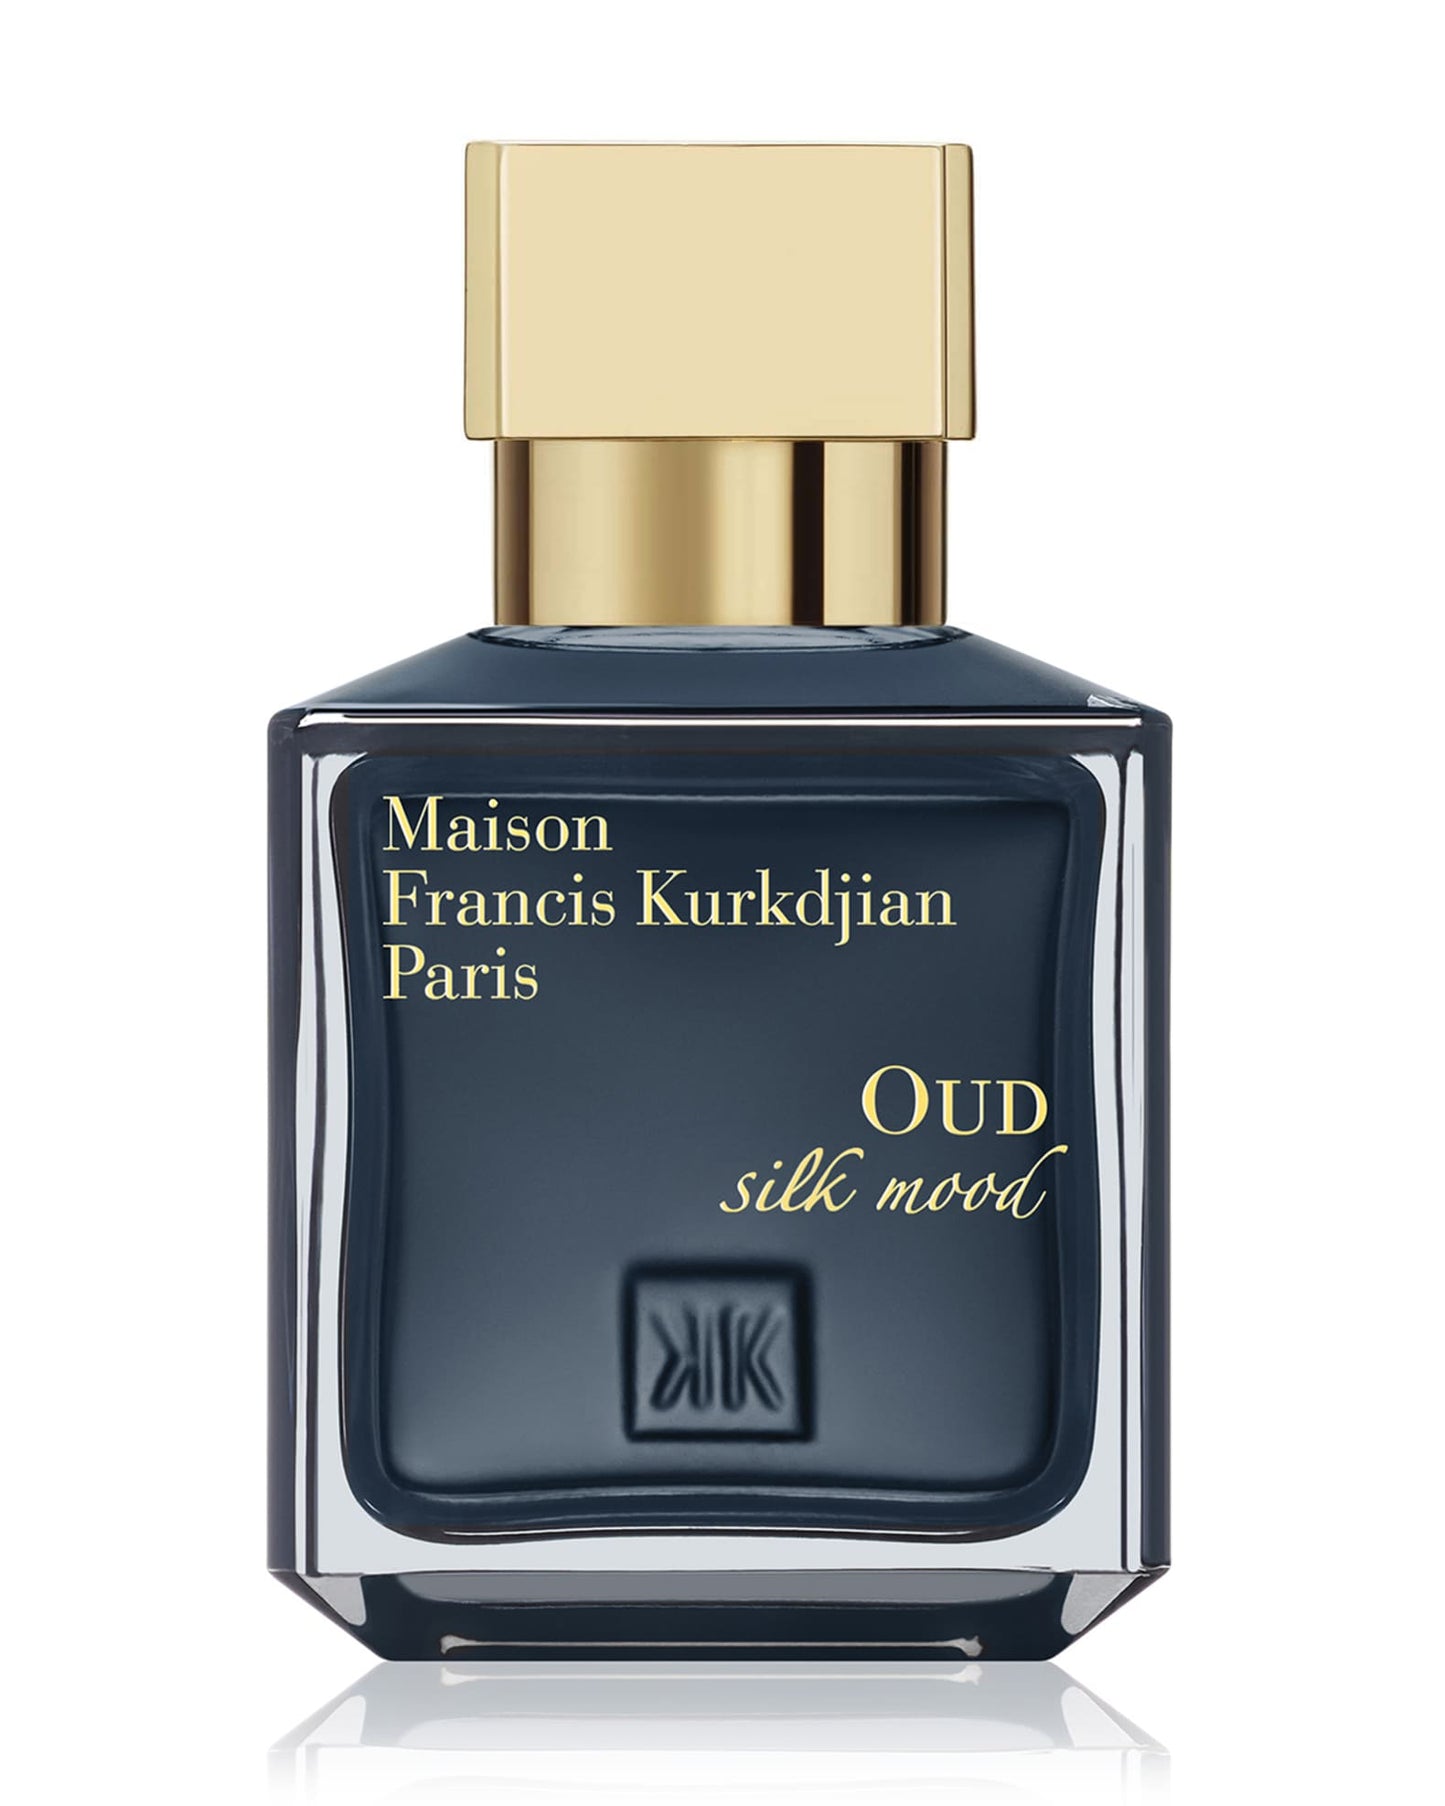 MAISON FRANCIS KURKDJIAN OUD silk mood Eau de Parfum